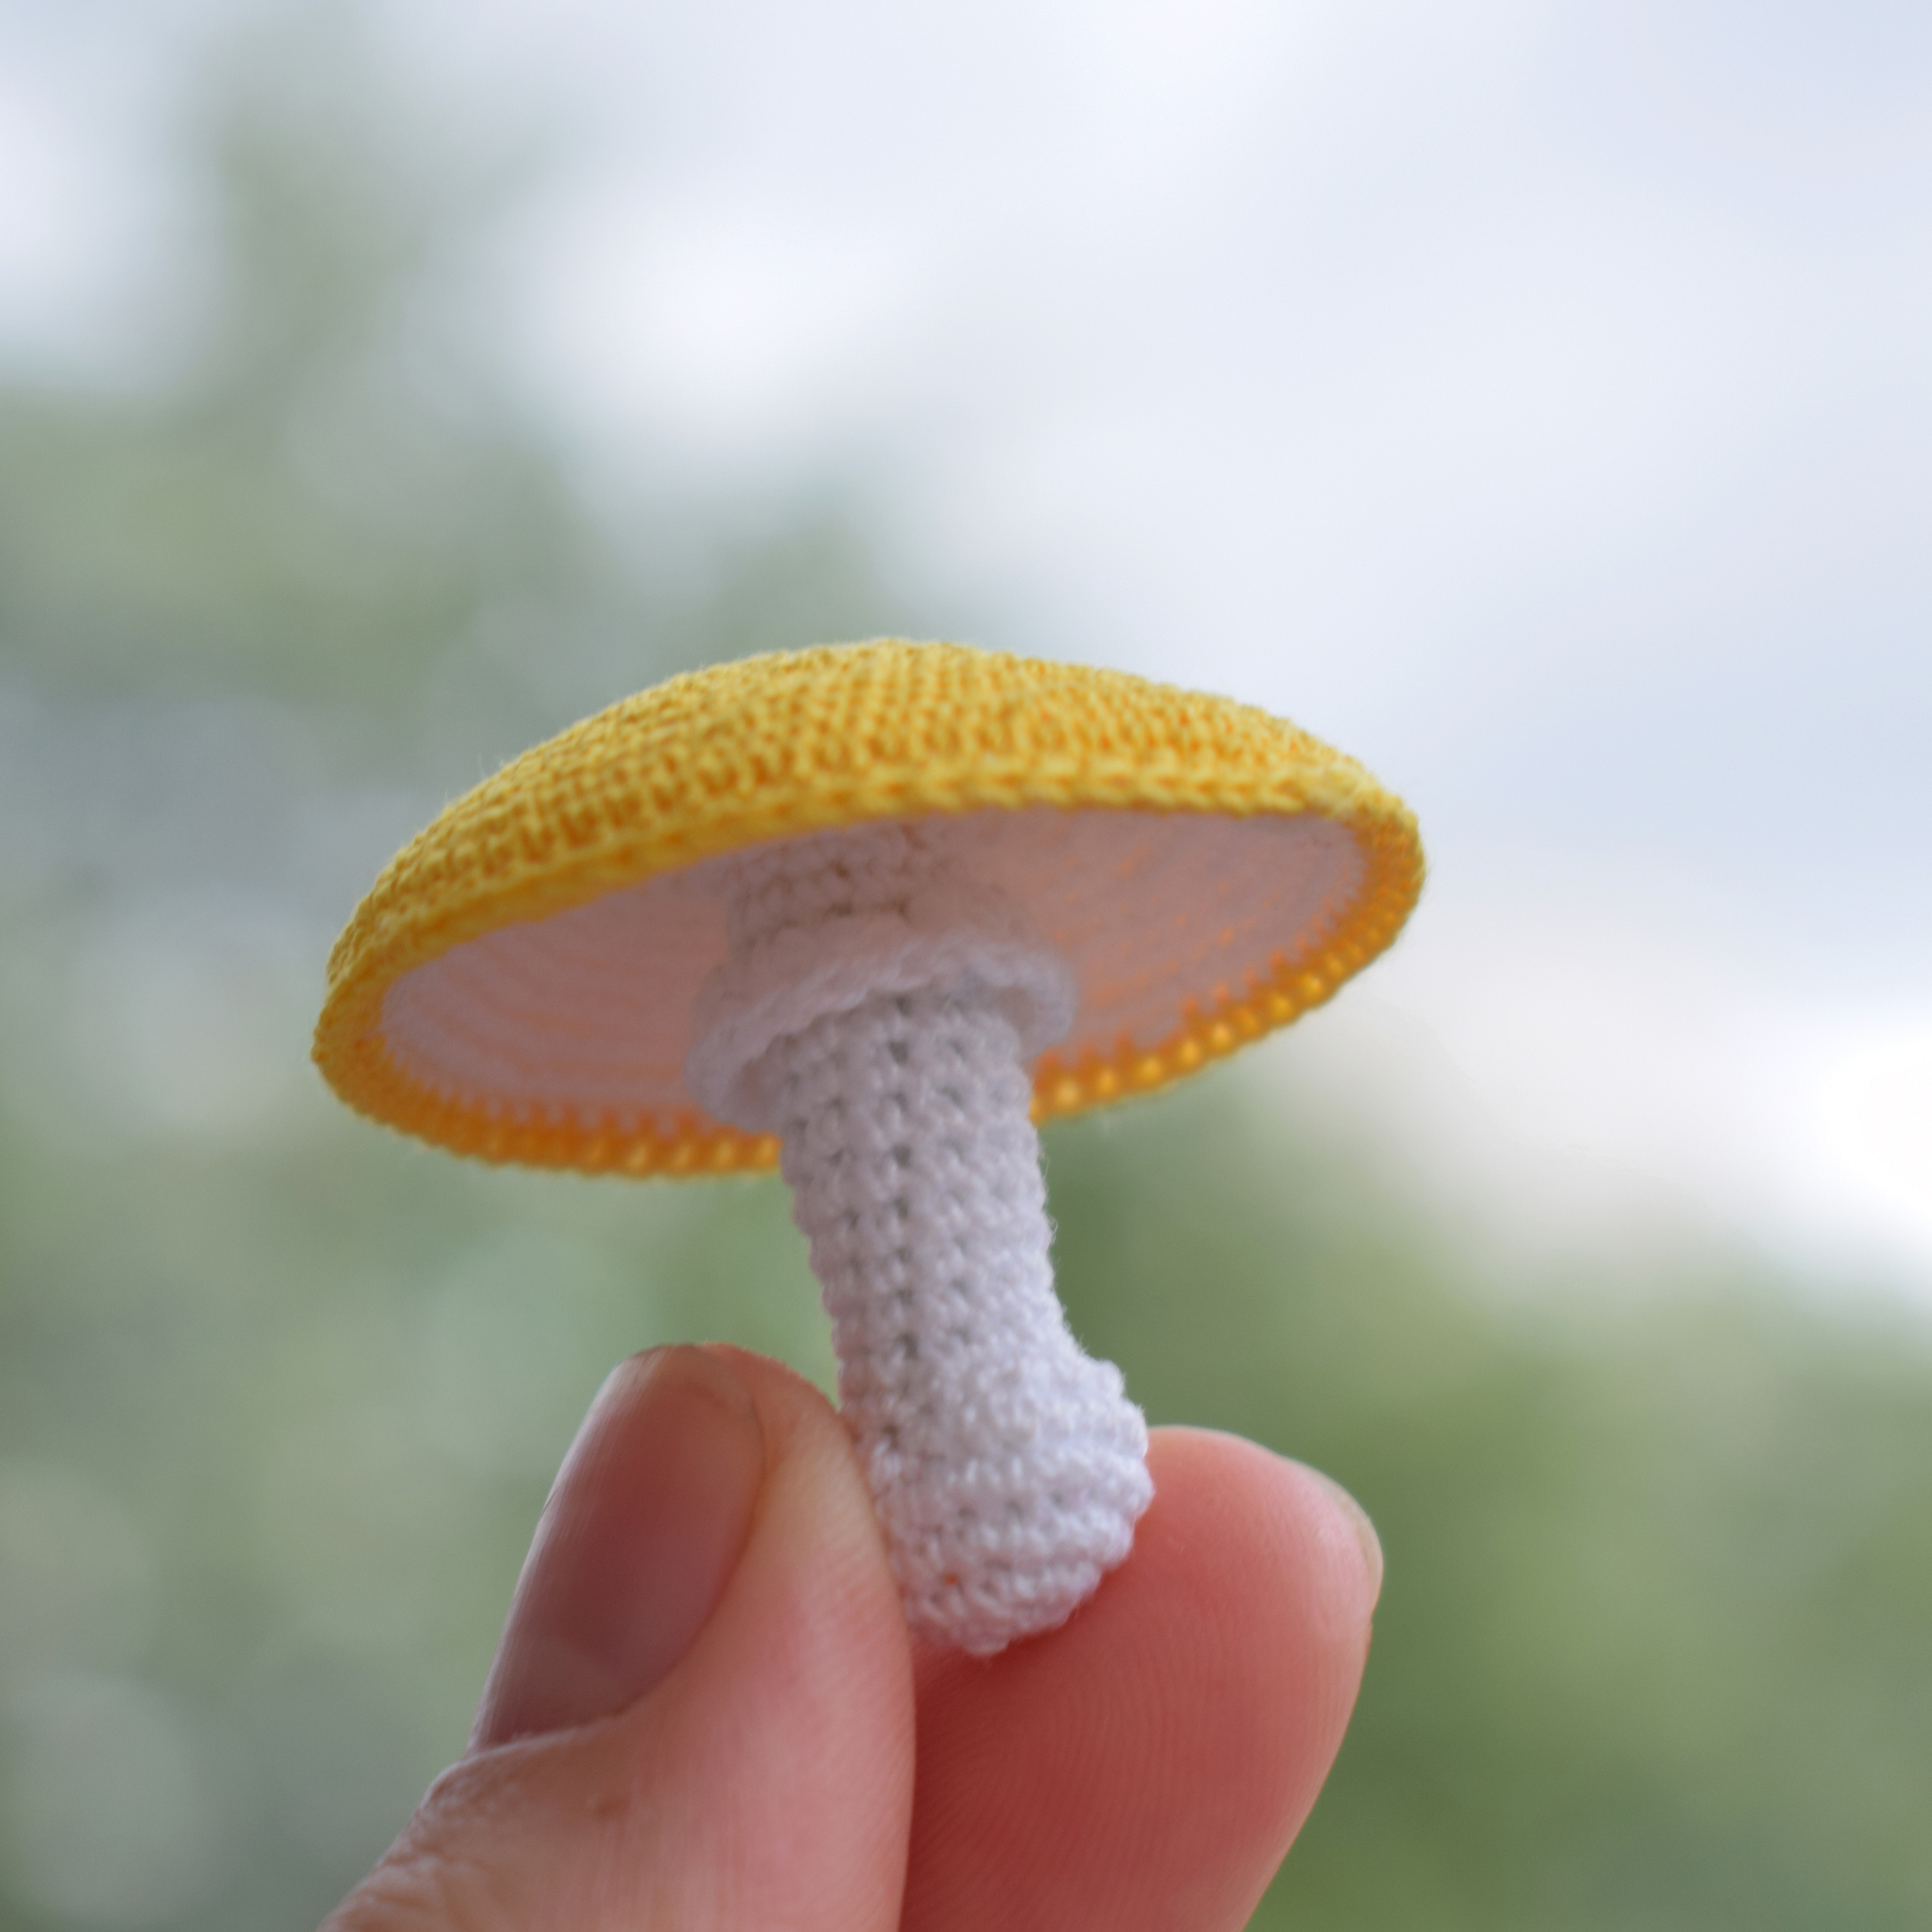 Mushrooms crochet pattern, fake food, 7 fly agaric beautiful